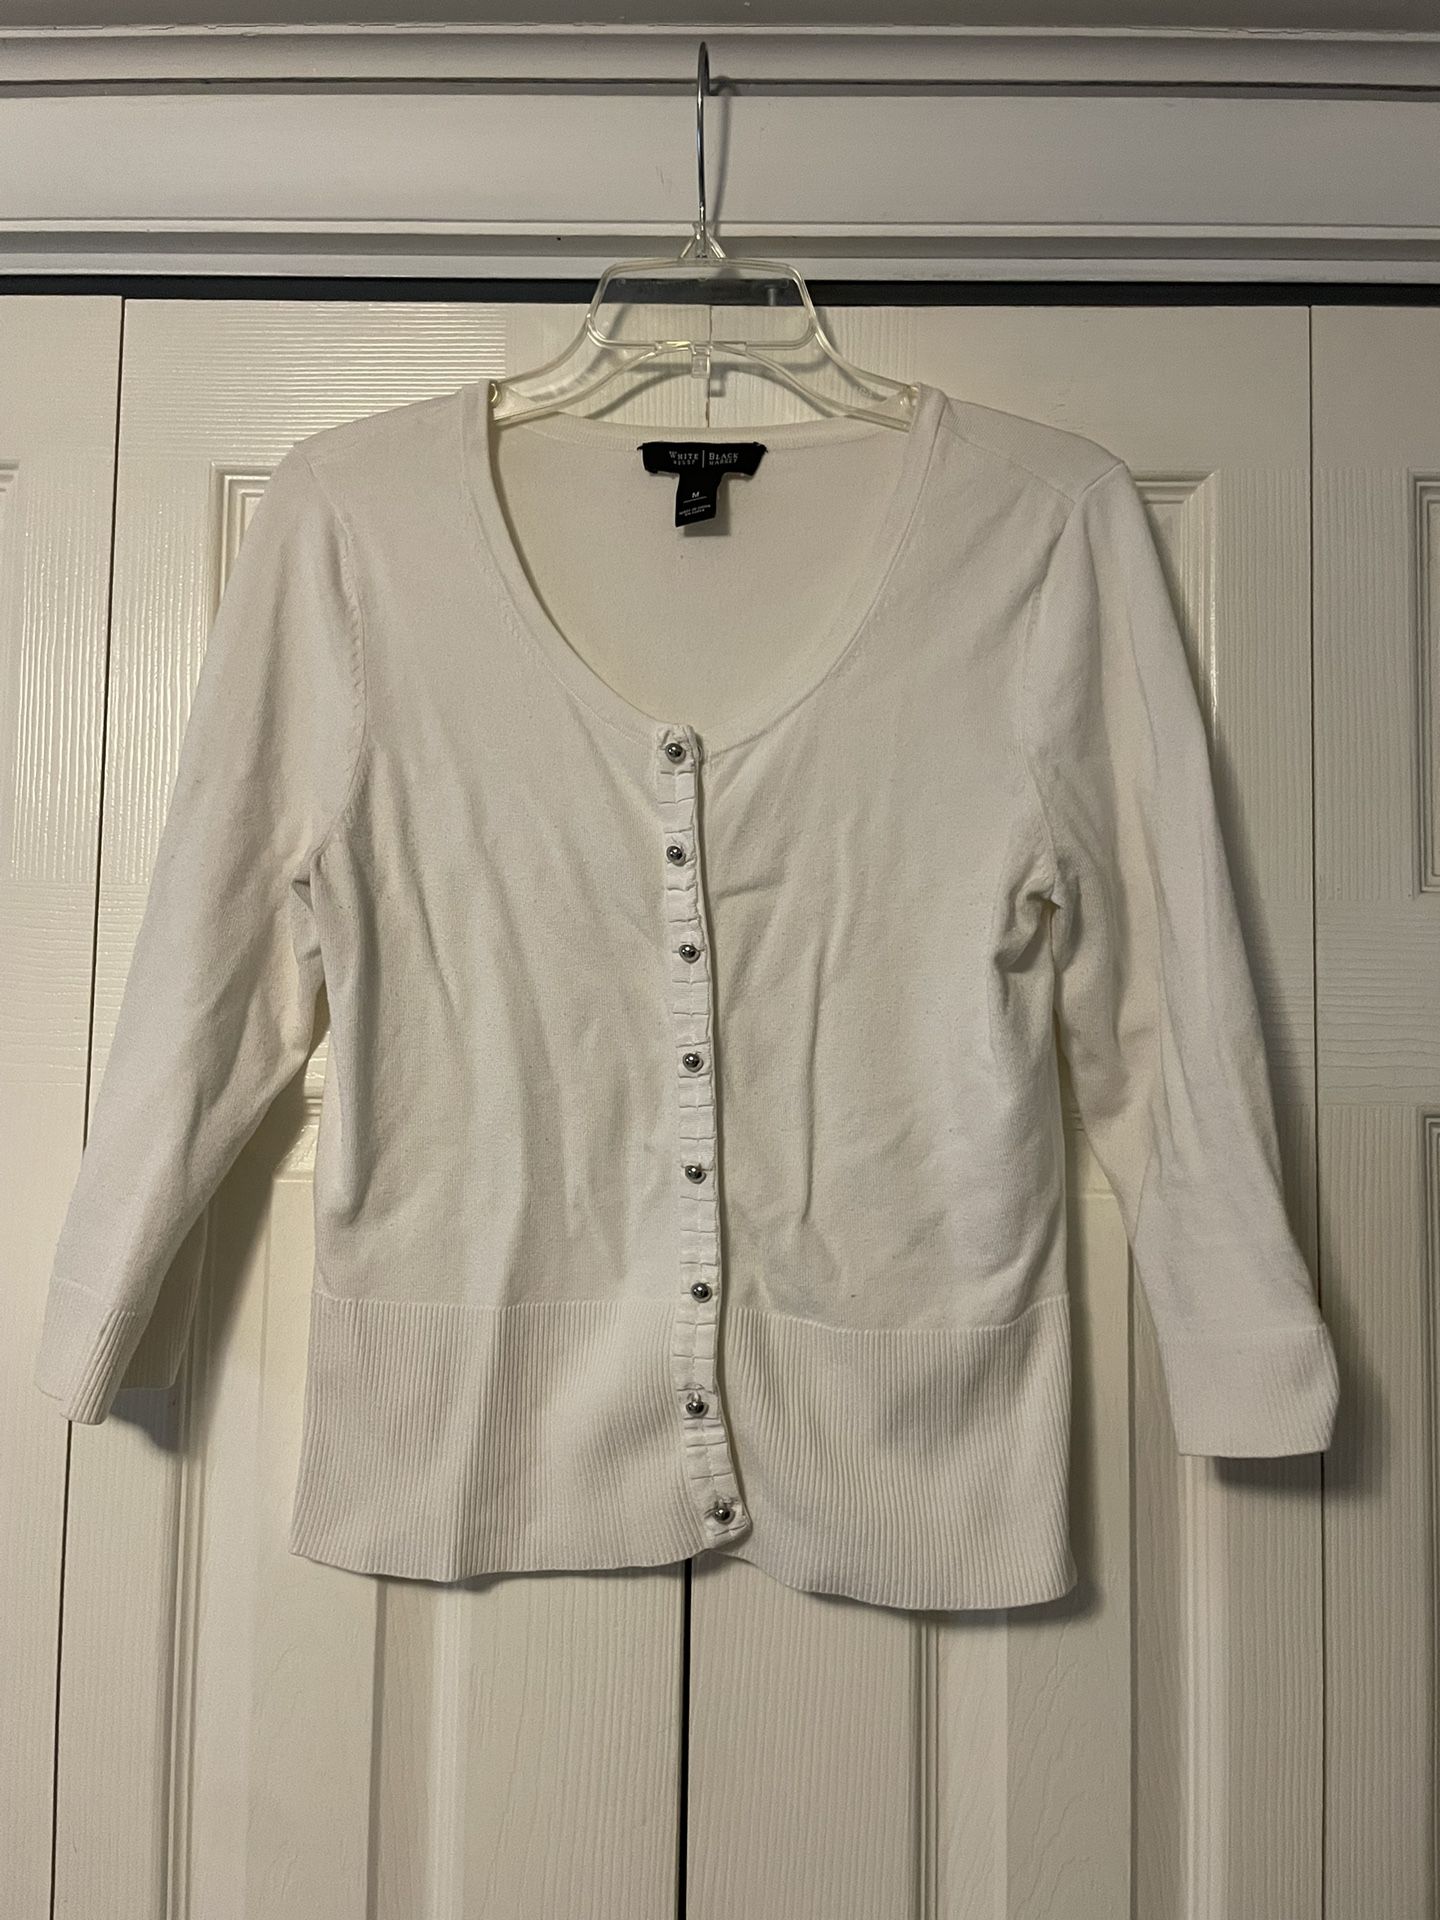 WHBM White Snap Button Down Cardigan - Size Medium